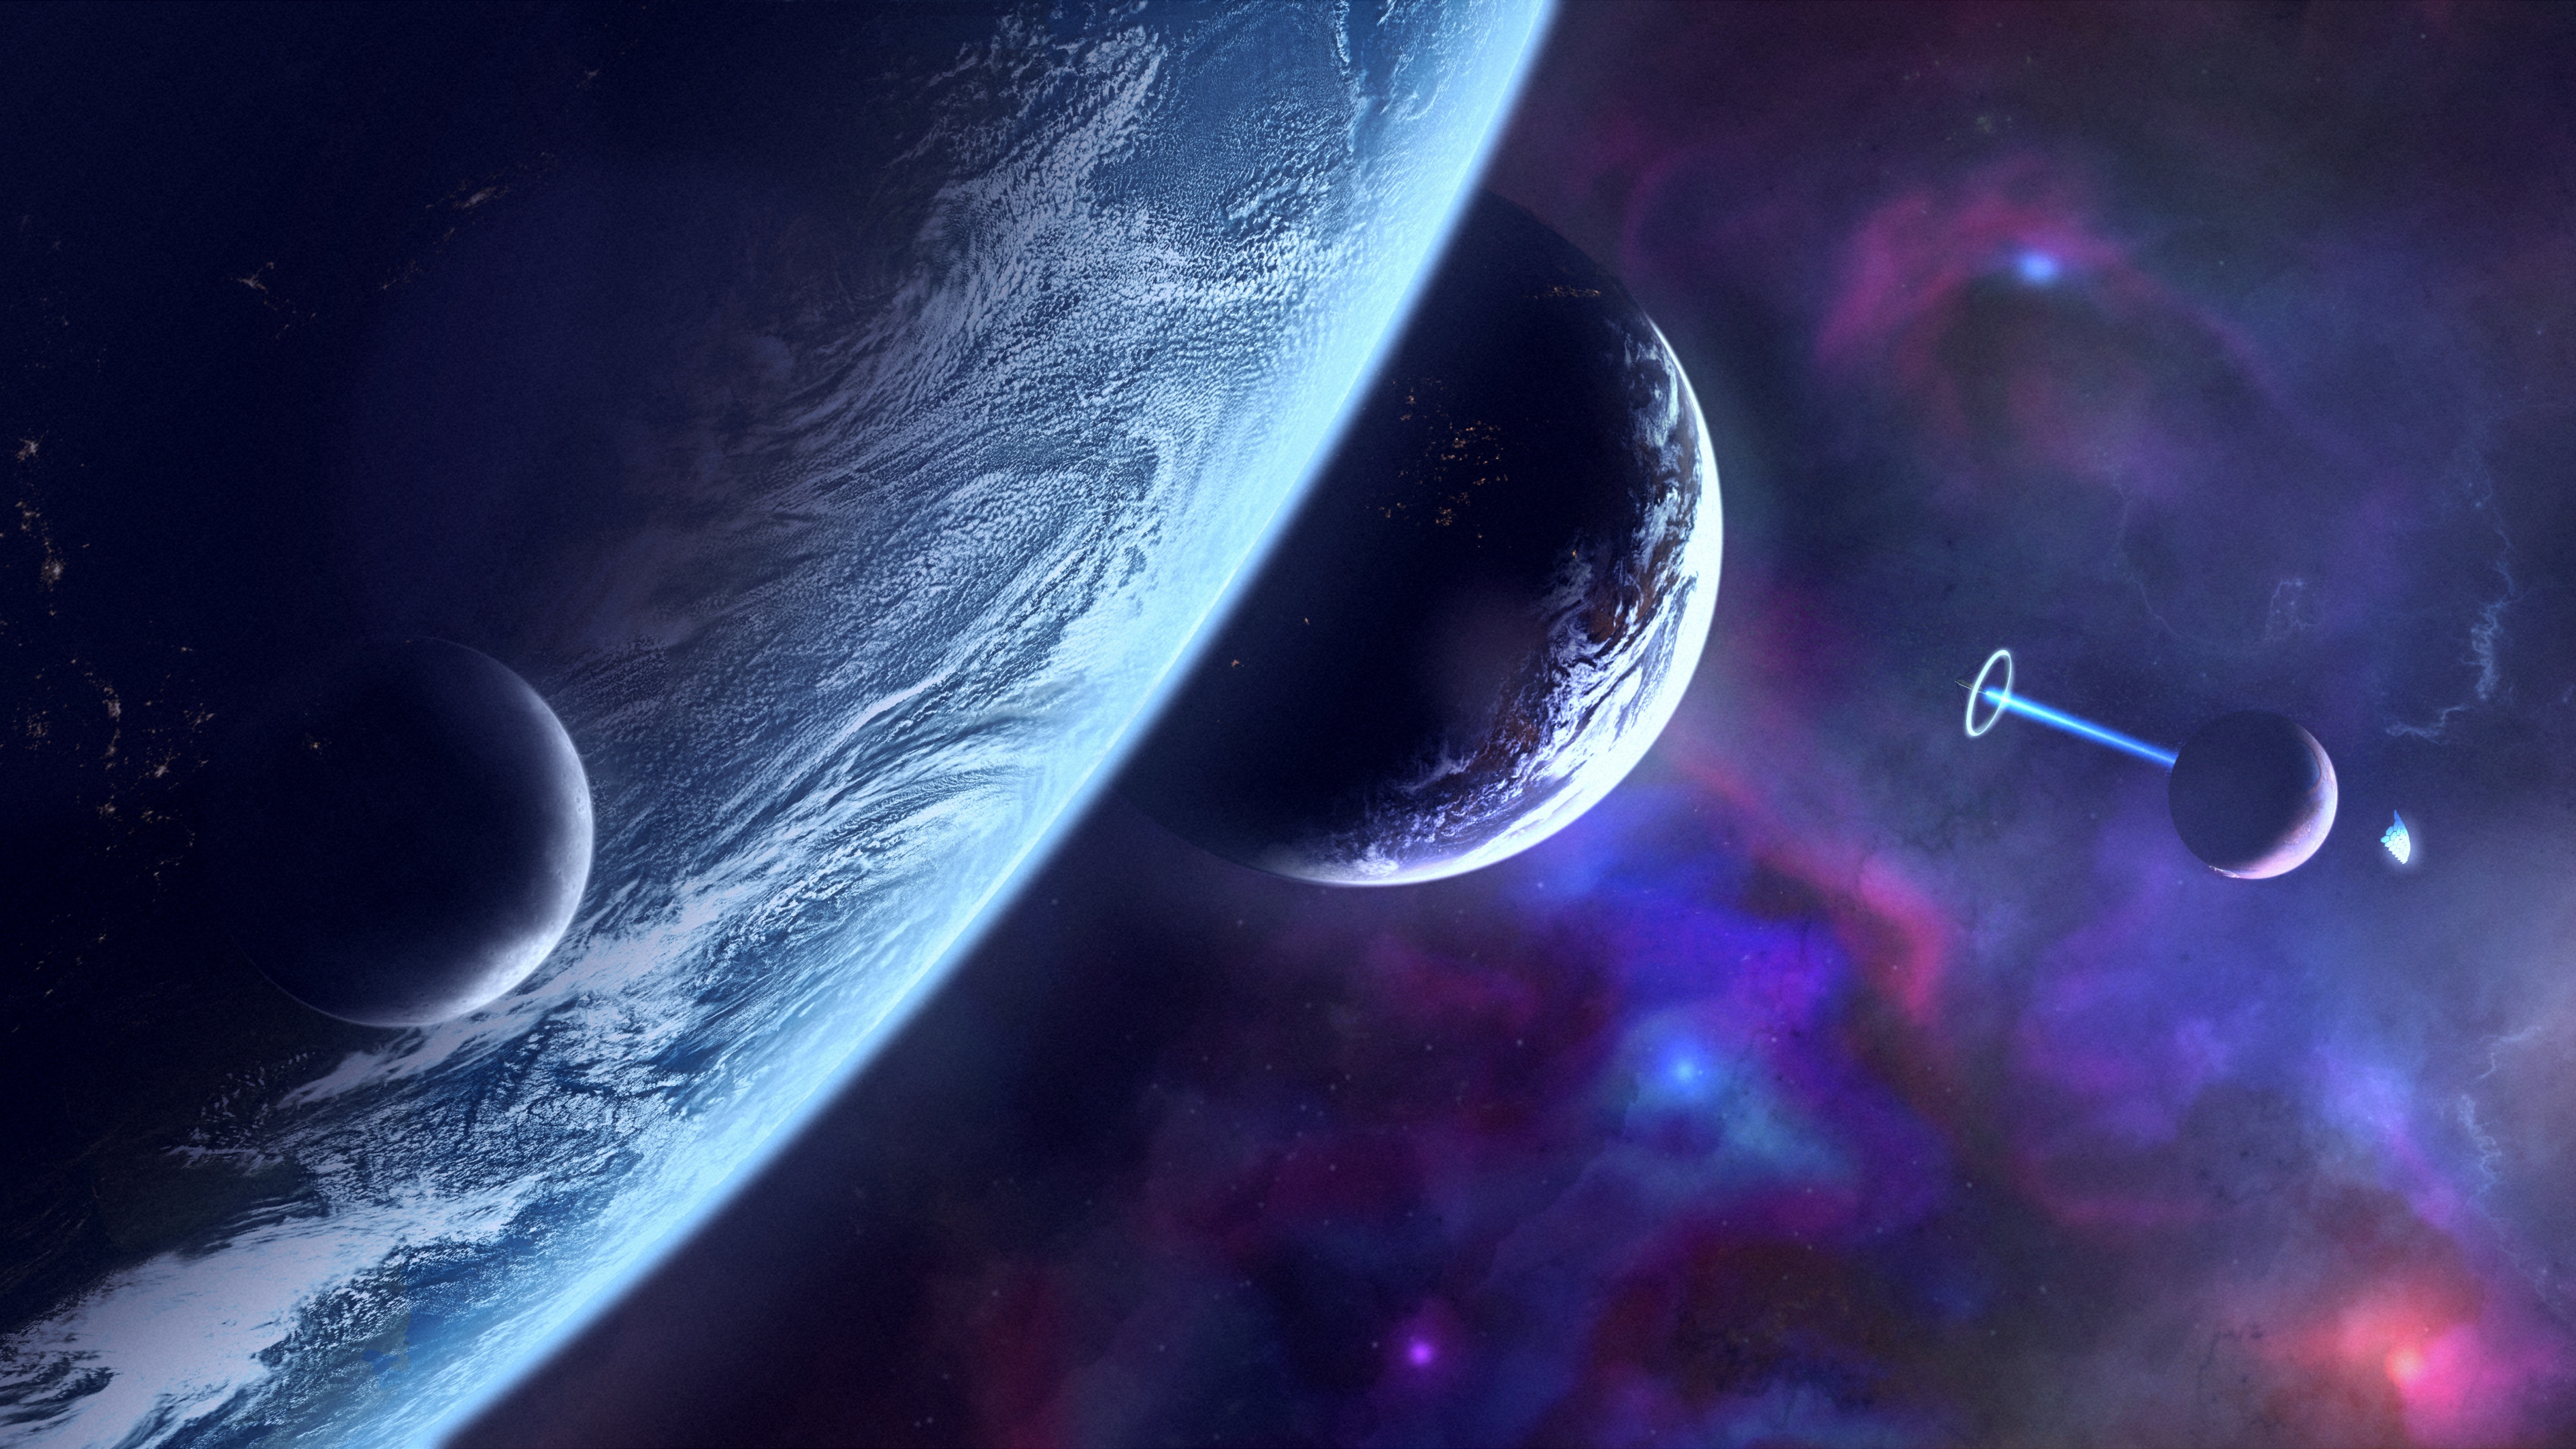 Space planet dance, Cosmic clouds art, 4K uhd wallpaper, Widescreen hd image, 3840x2160 4K Desktop